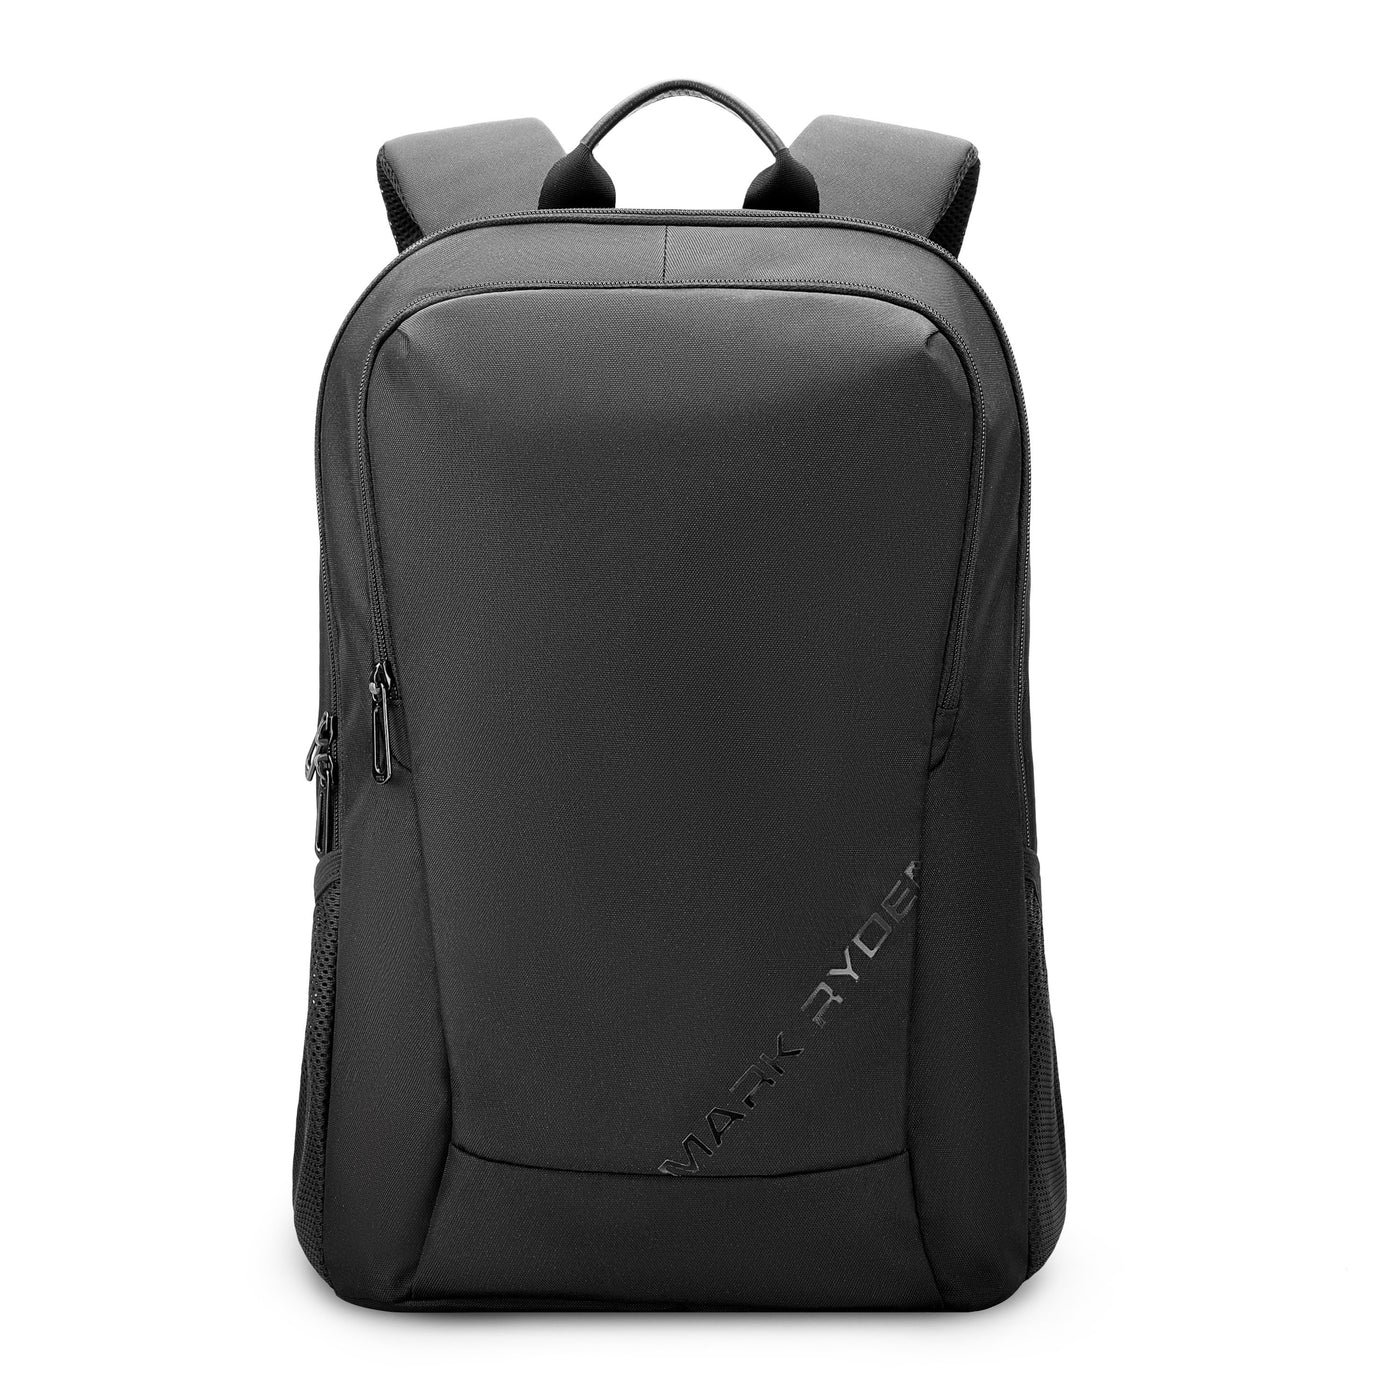 Mark Ryden Canada UNO Black laptop Backpack